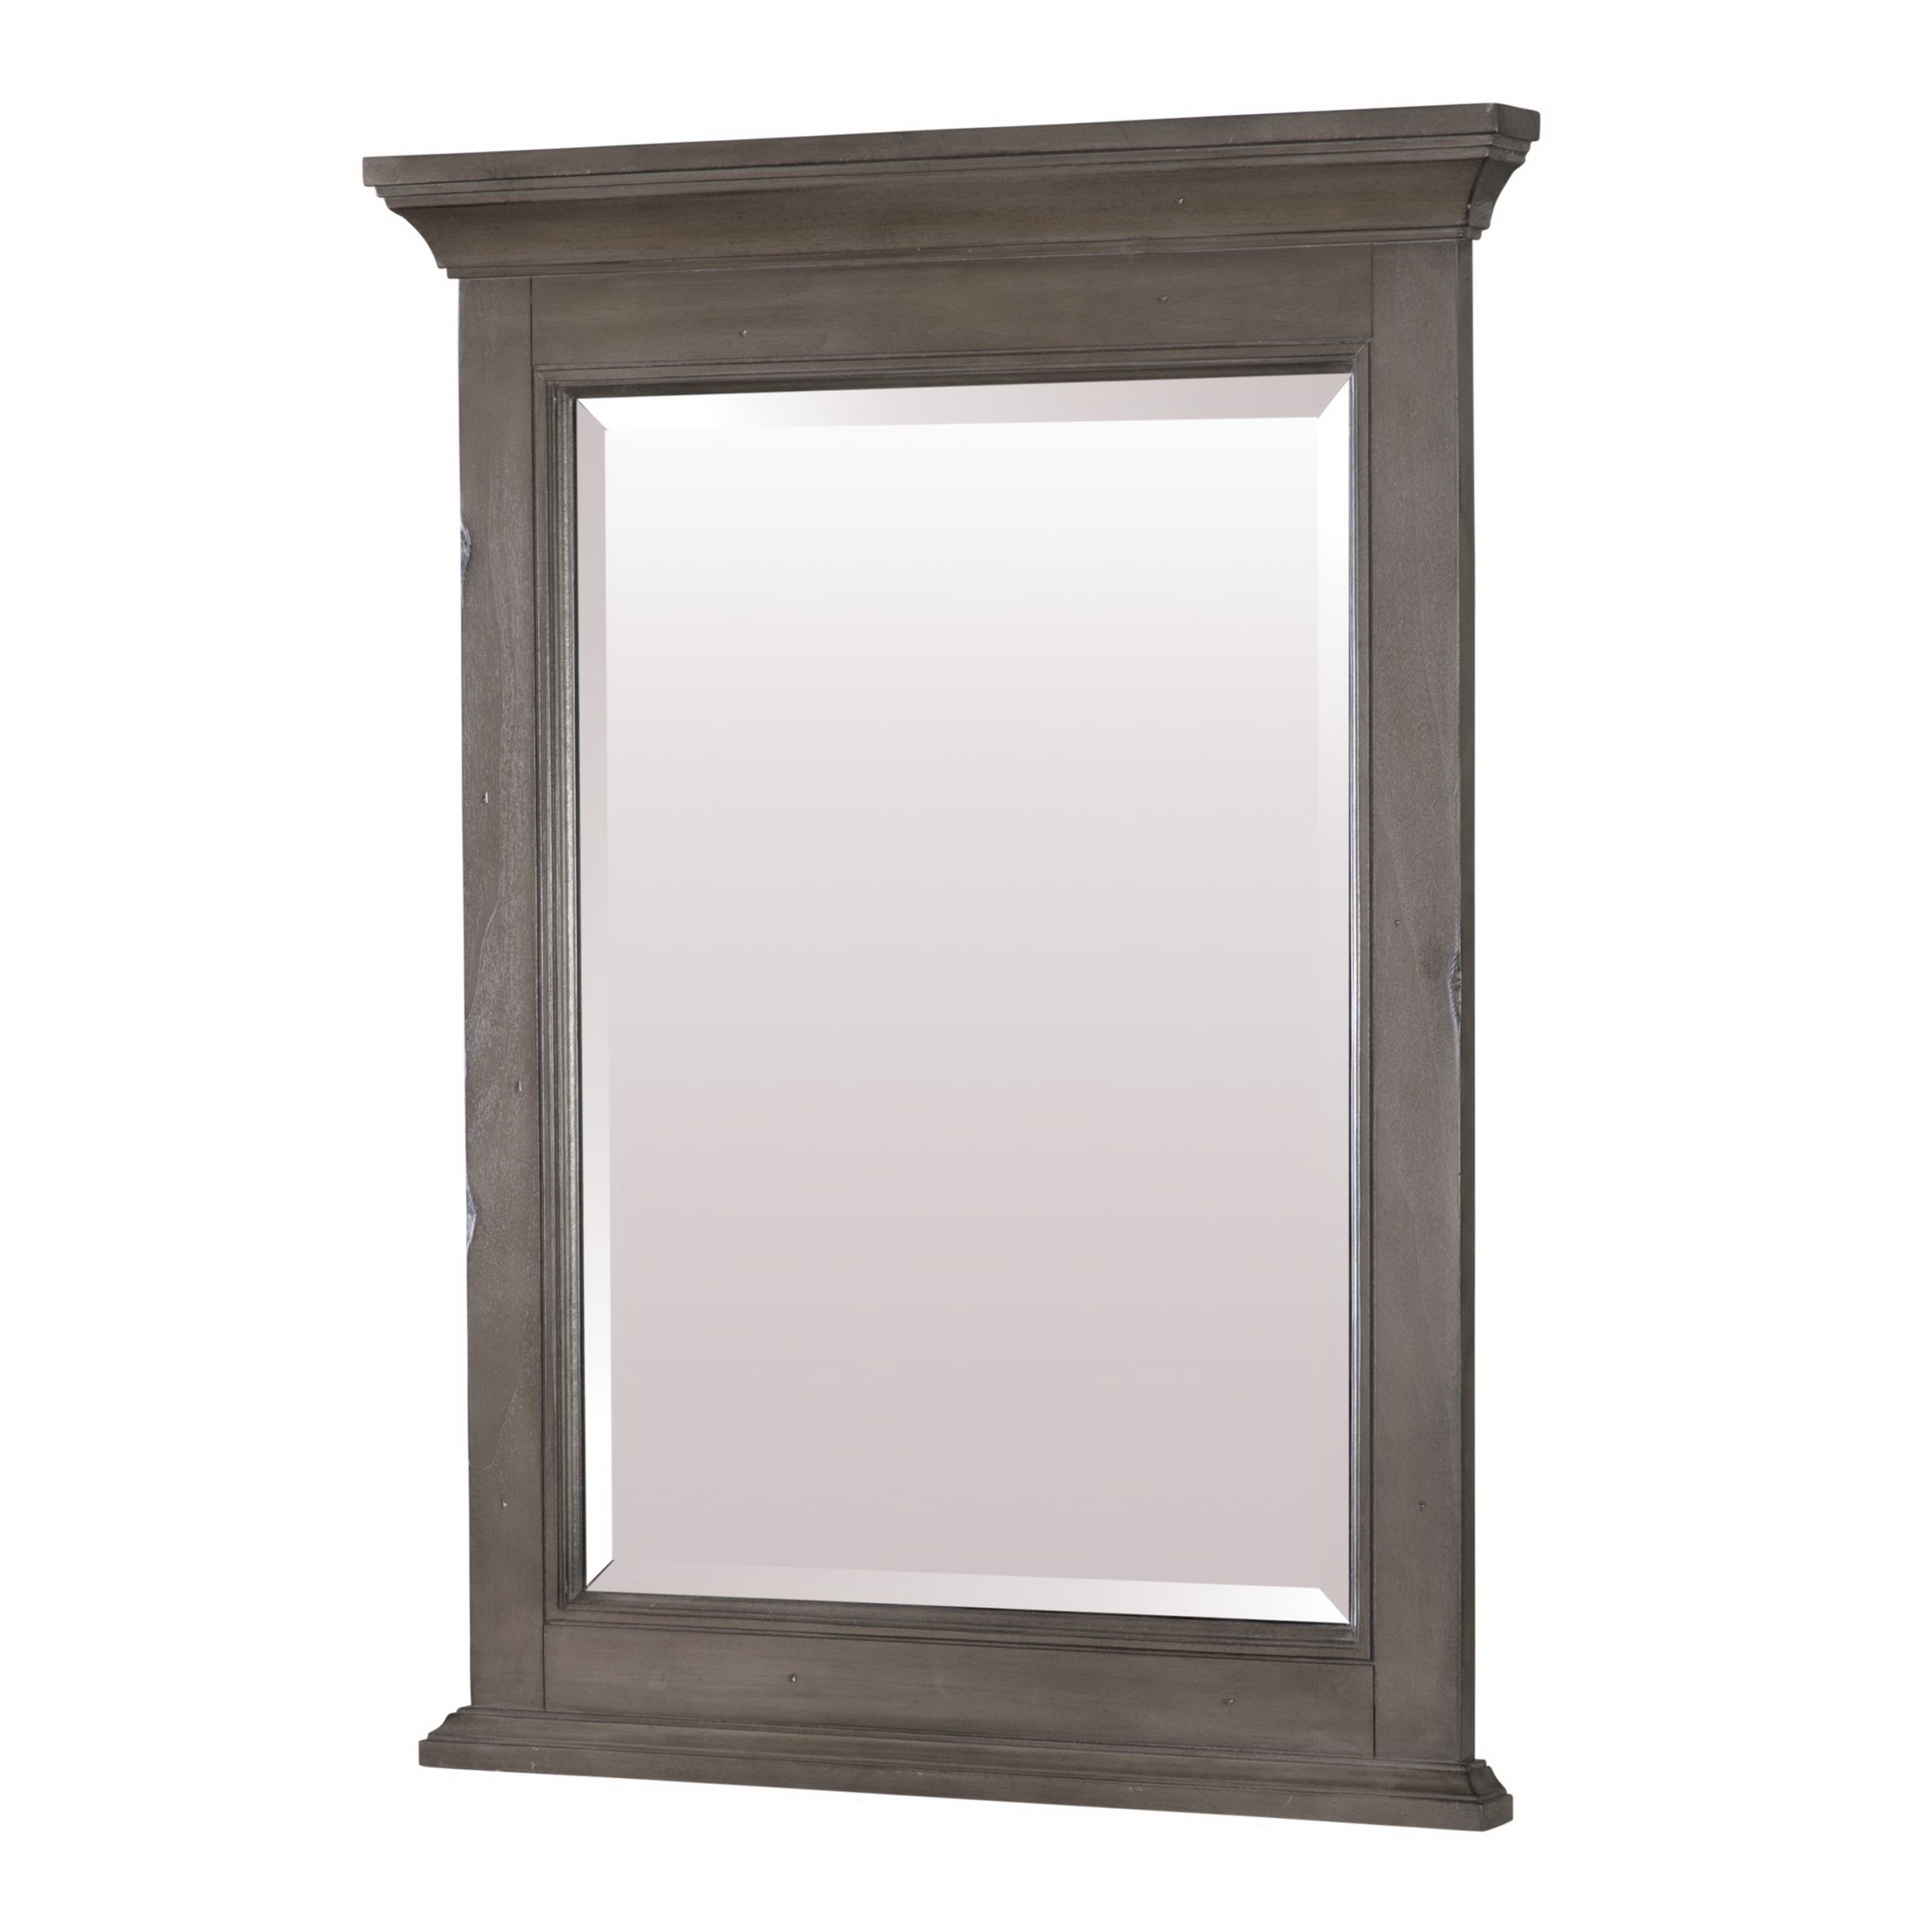 Brantley Series BAGM2432 Framed Mirror, Rectangular, 24 in W, 32 in H, Wood Frame, Wall